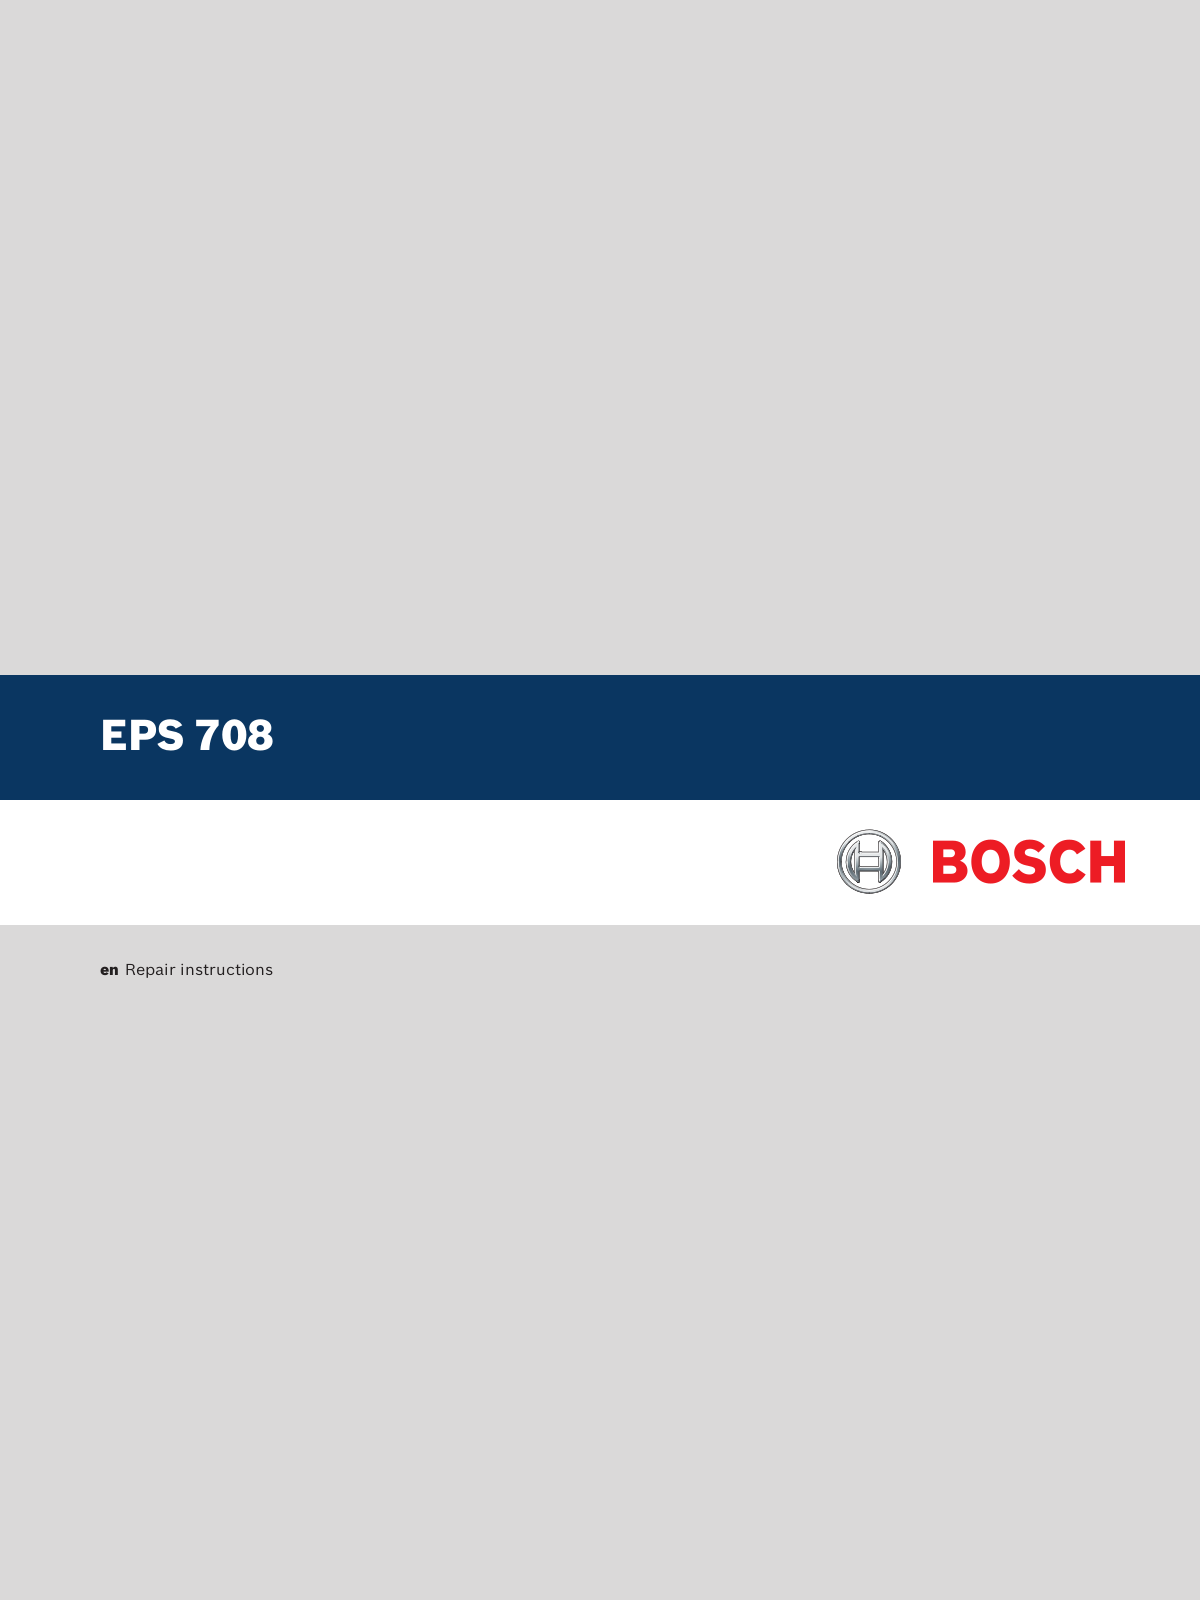 Bosch EPS 708 Repair Instructions